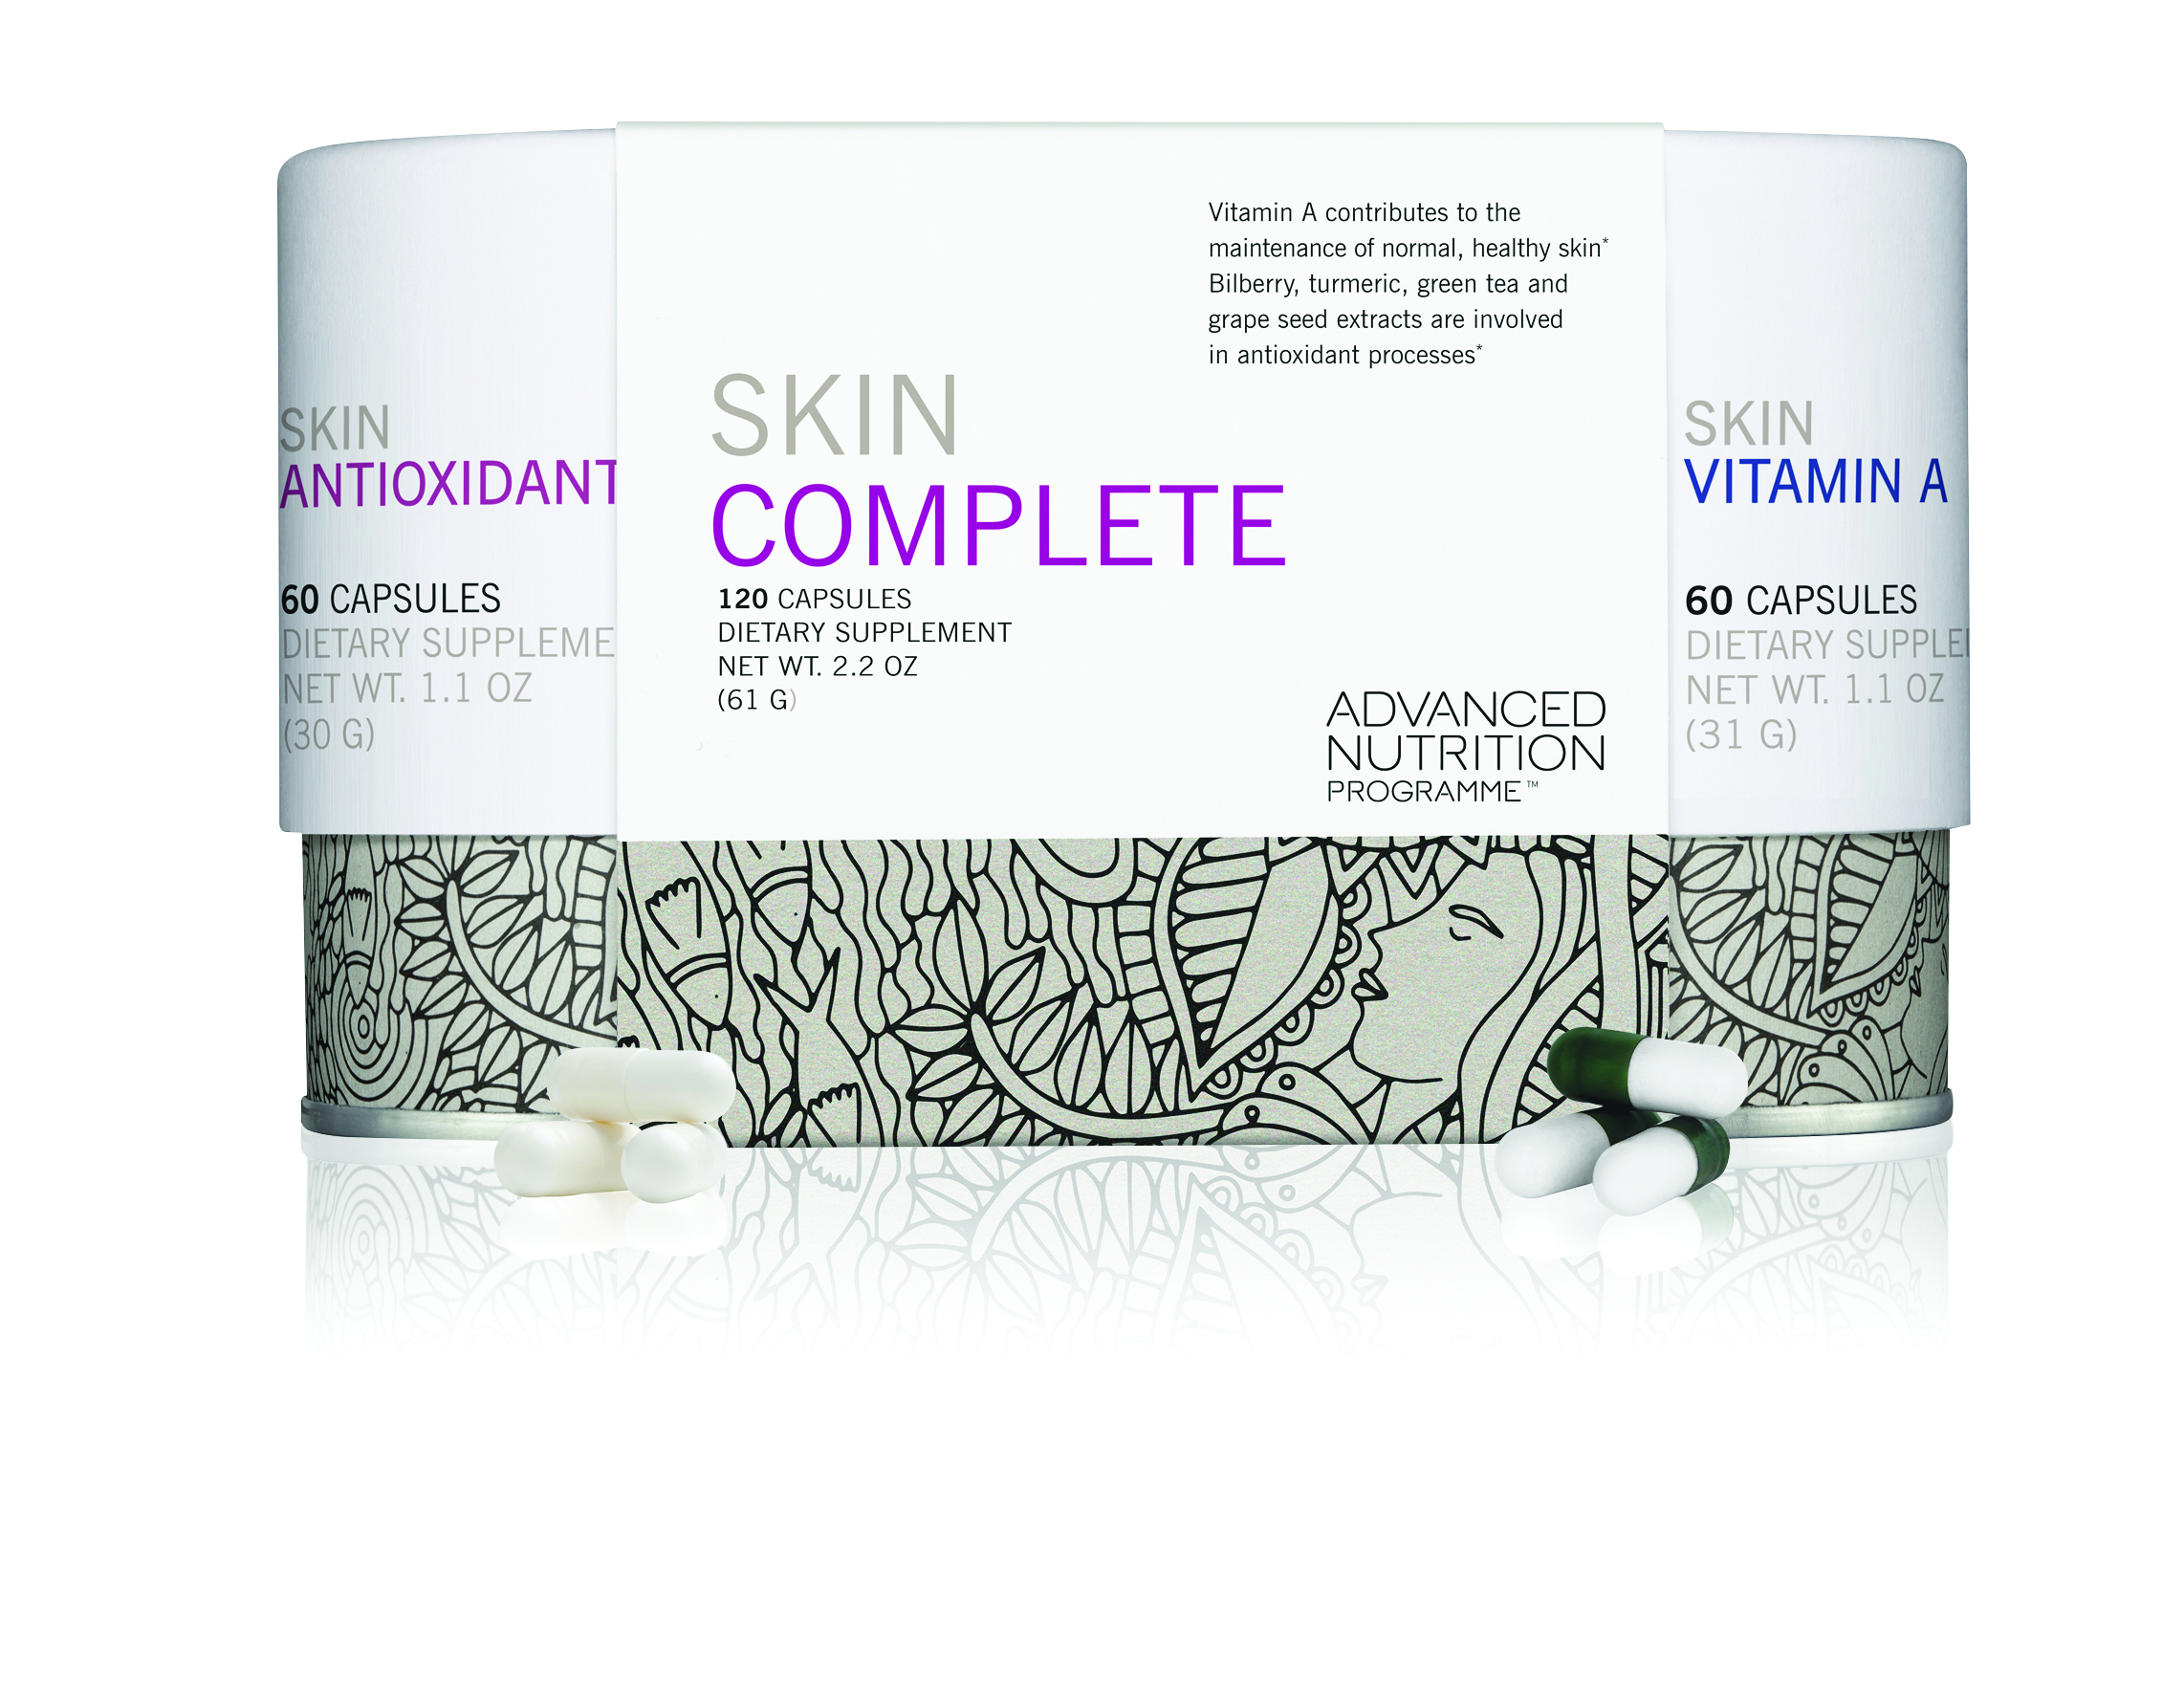 Skin Complete – Advanced Nutrition Programme